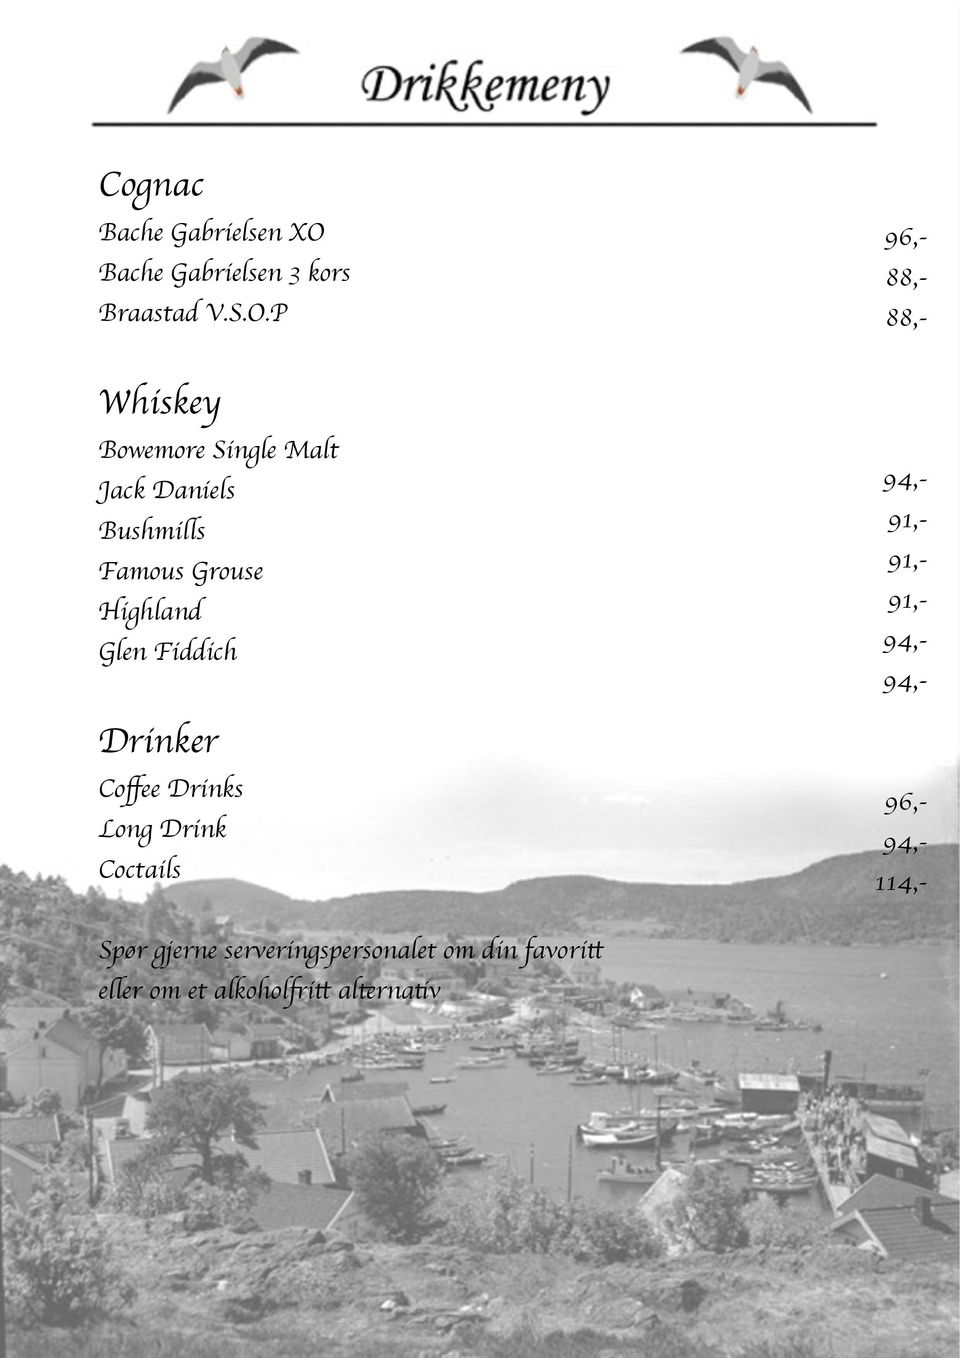 P Whiskey Bowemore Single Malt Jack Daniels Bushmills Famous Grouse Highland Glen